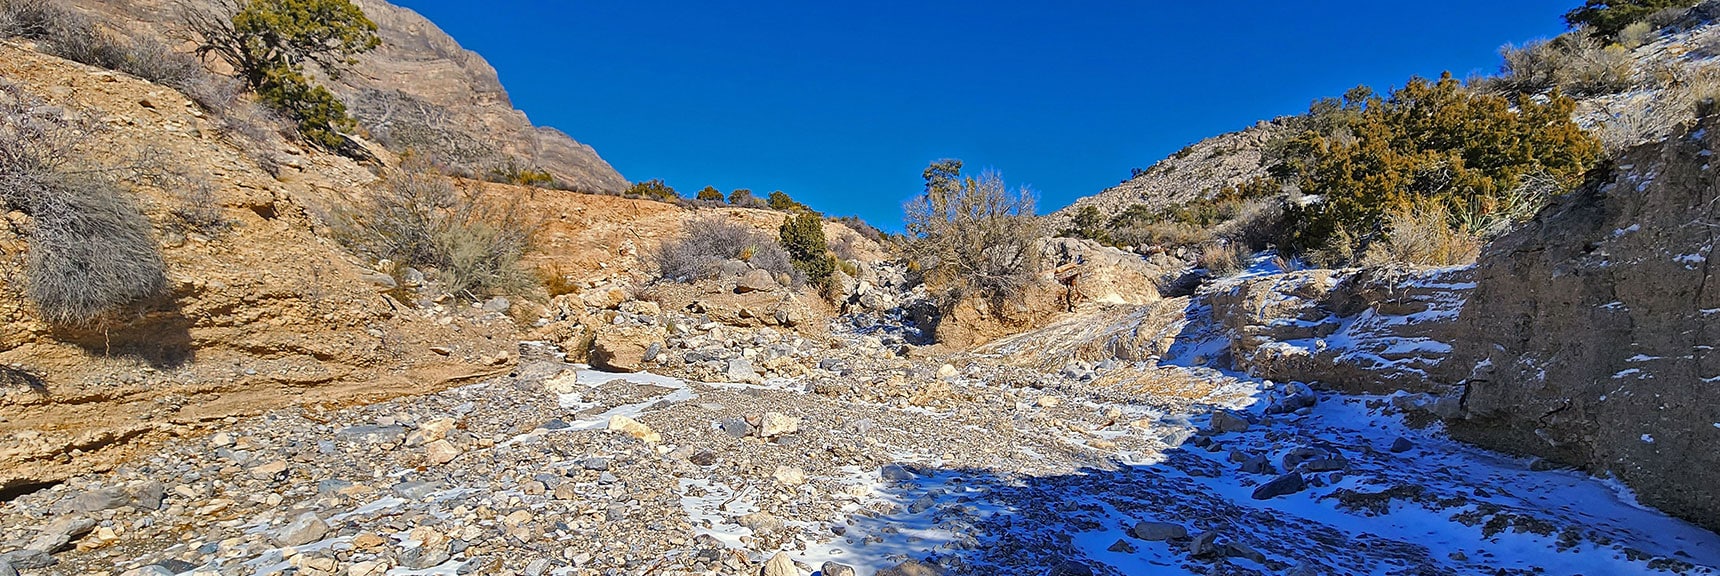 Wash Circles Right Along Base of La Madre Ridgeline Toward Brownstone Basin | 3 Basin Circuit | Calico Basin, Brownstone Basin, Red Rock Canyon, Nevada